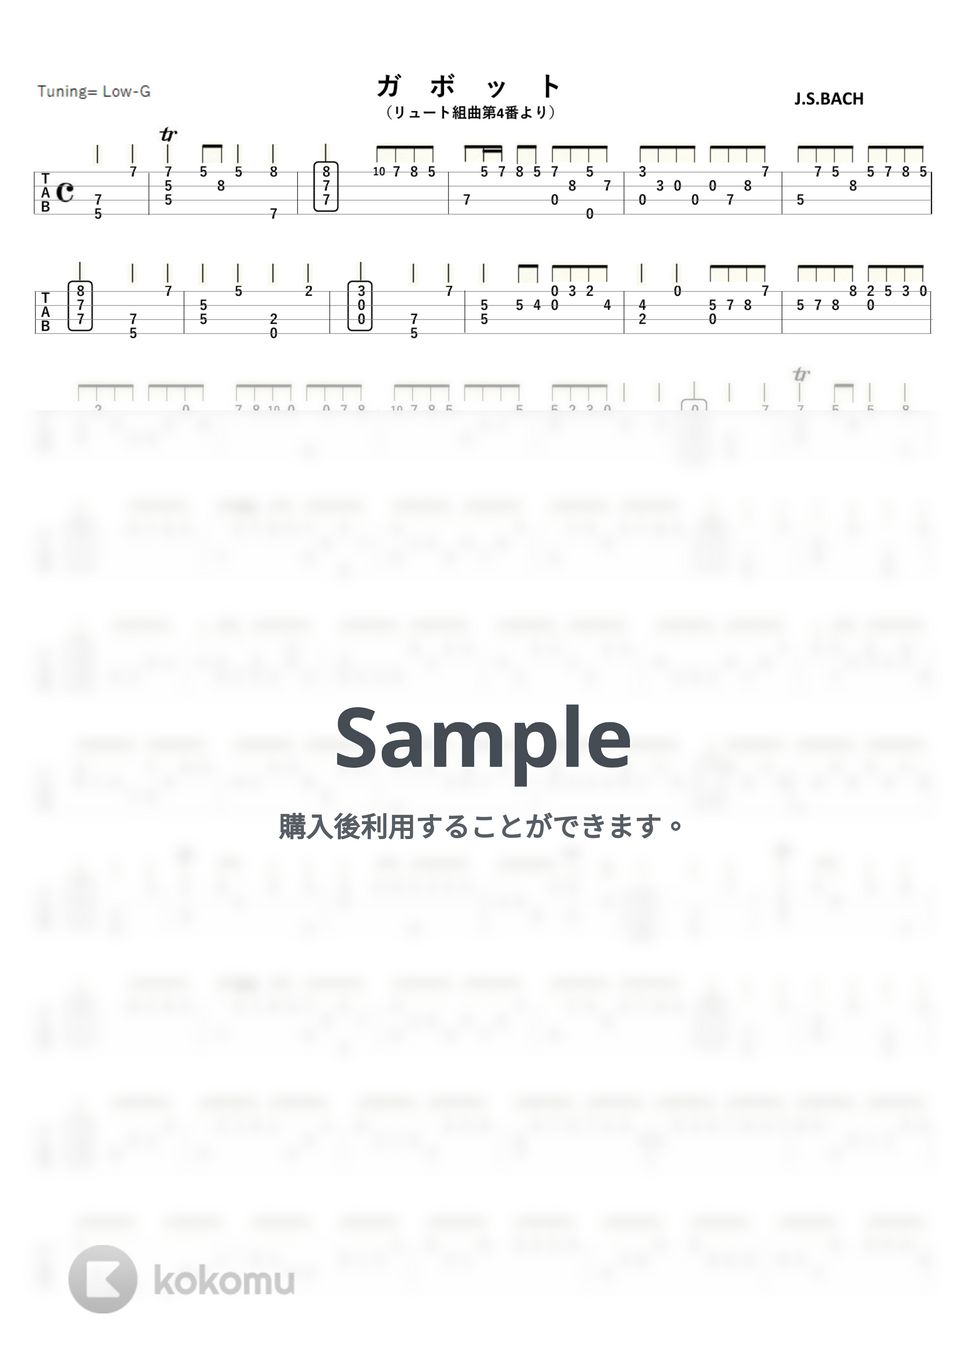 J.S.バッハ - ガボット～リュート組曲第4番より～ (ｳｸﾚﾚｿﾛTAB譜 / Low-G / 上級) by ukulelepapa